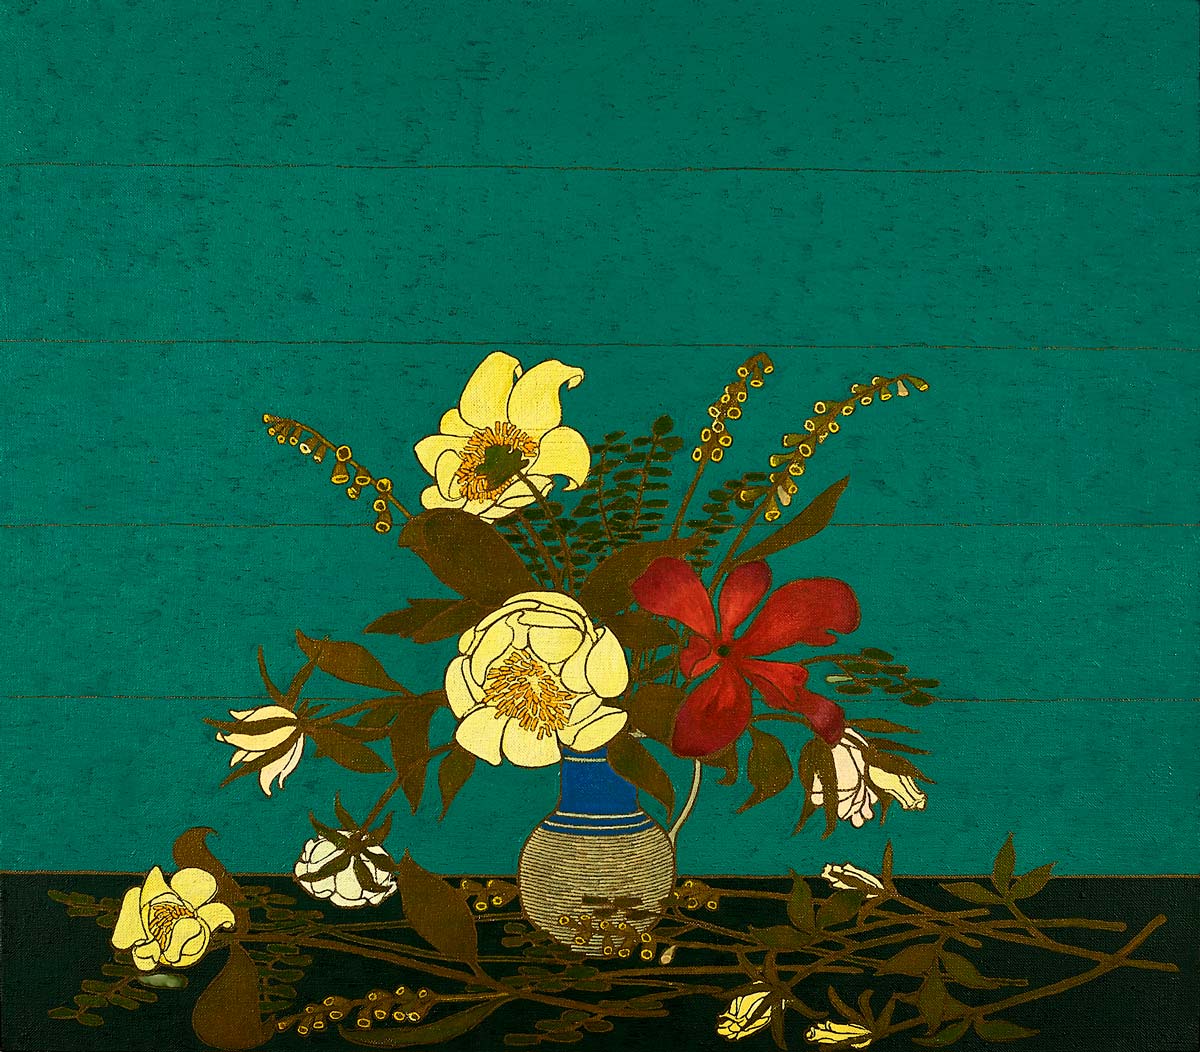 Berlin Flowers (Edwina’s Vase), 70 x 80 cm, Oil on Linen, 2020, Stephen Chambers Studio